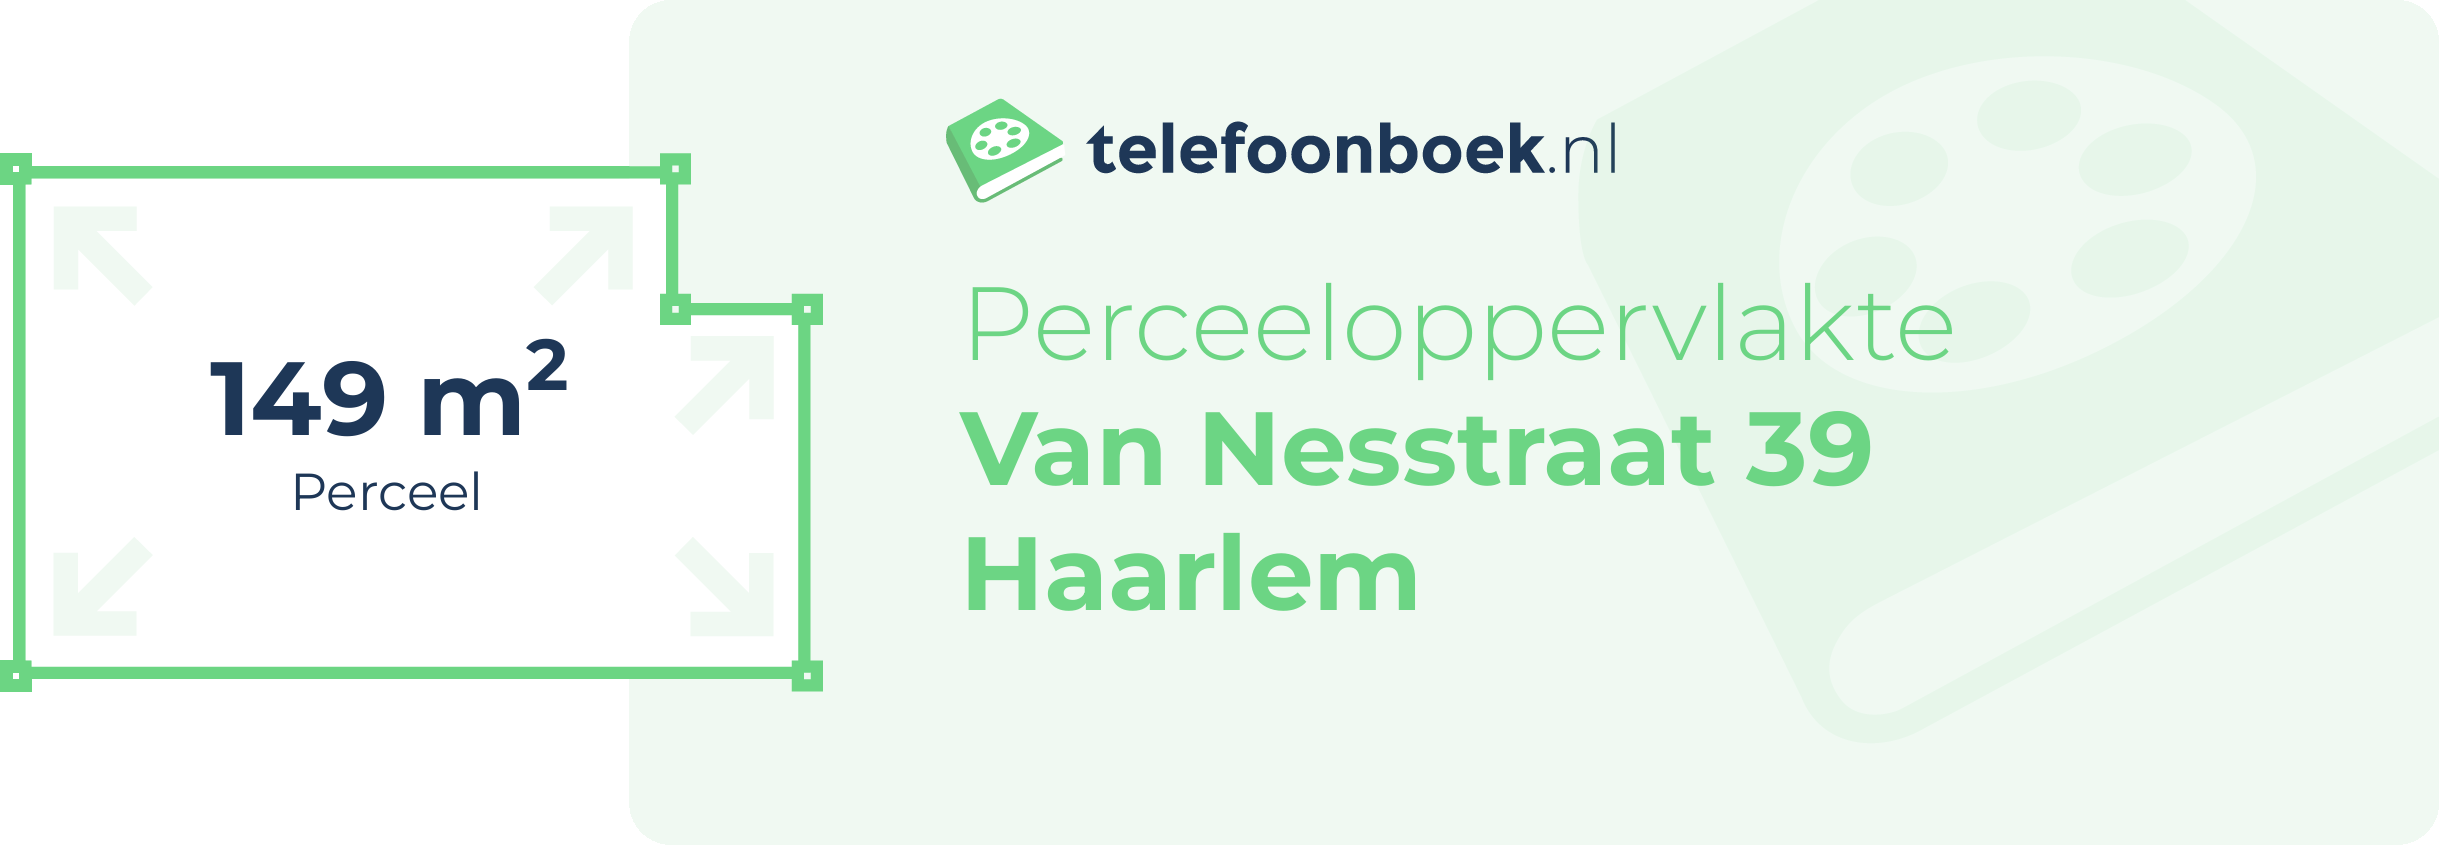 Perceeloppervlakte Van Nesstraat 39 Haarlem